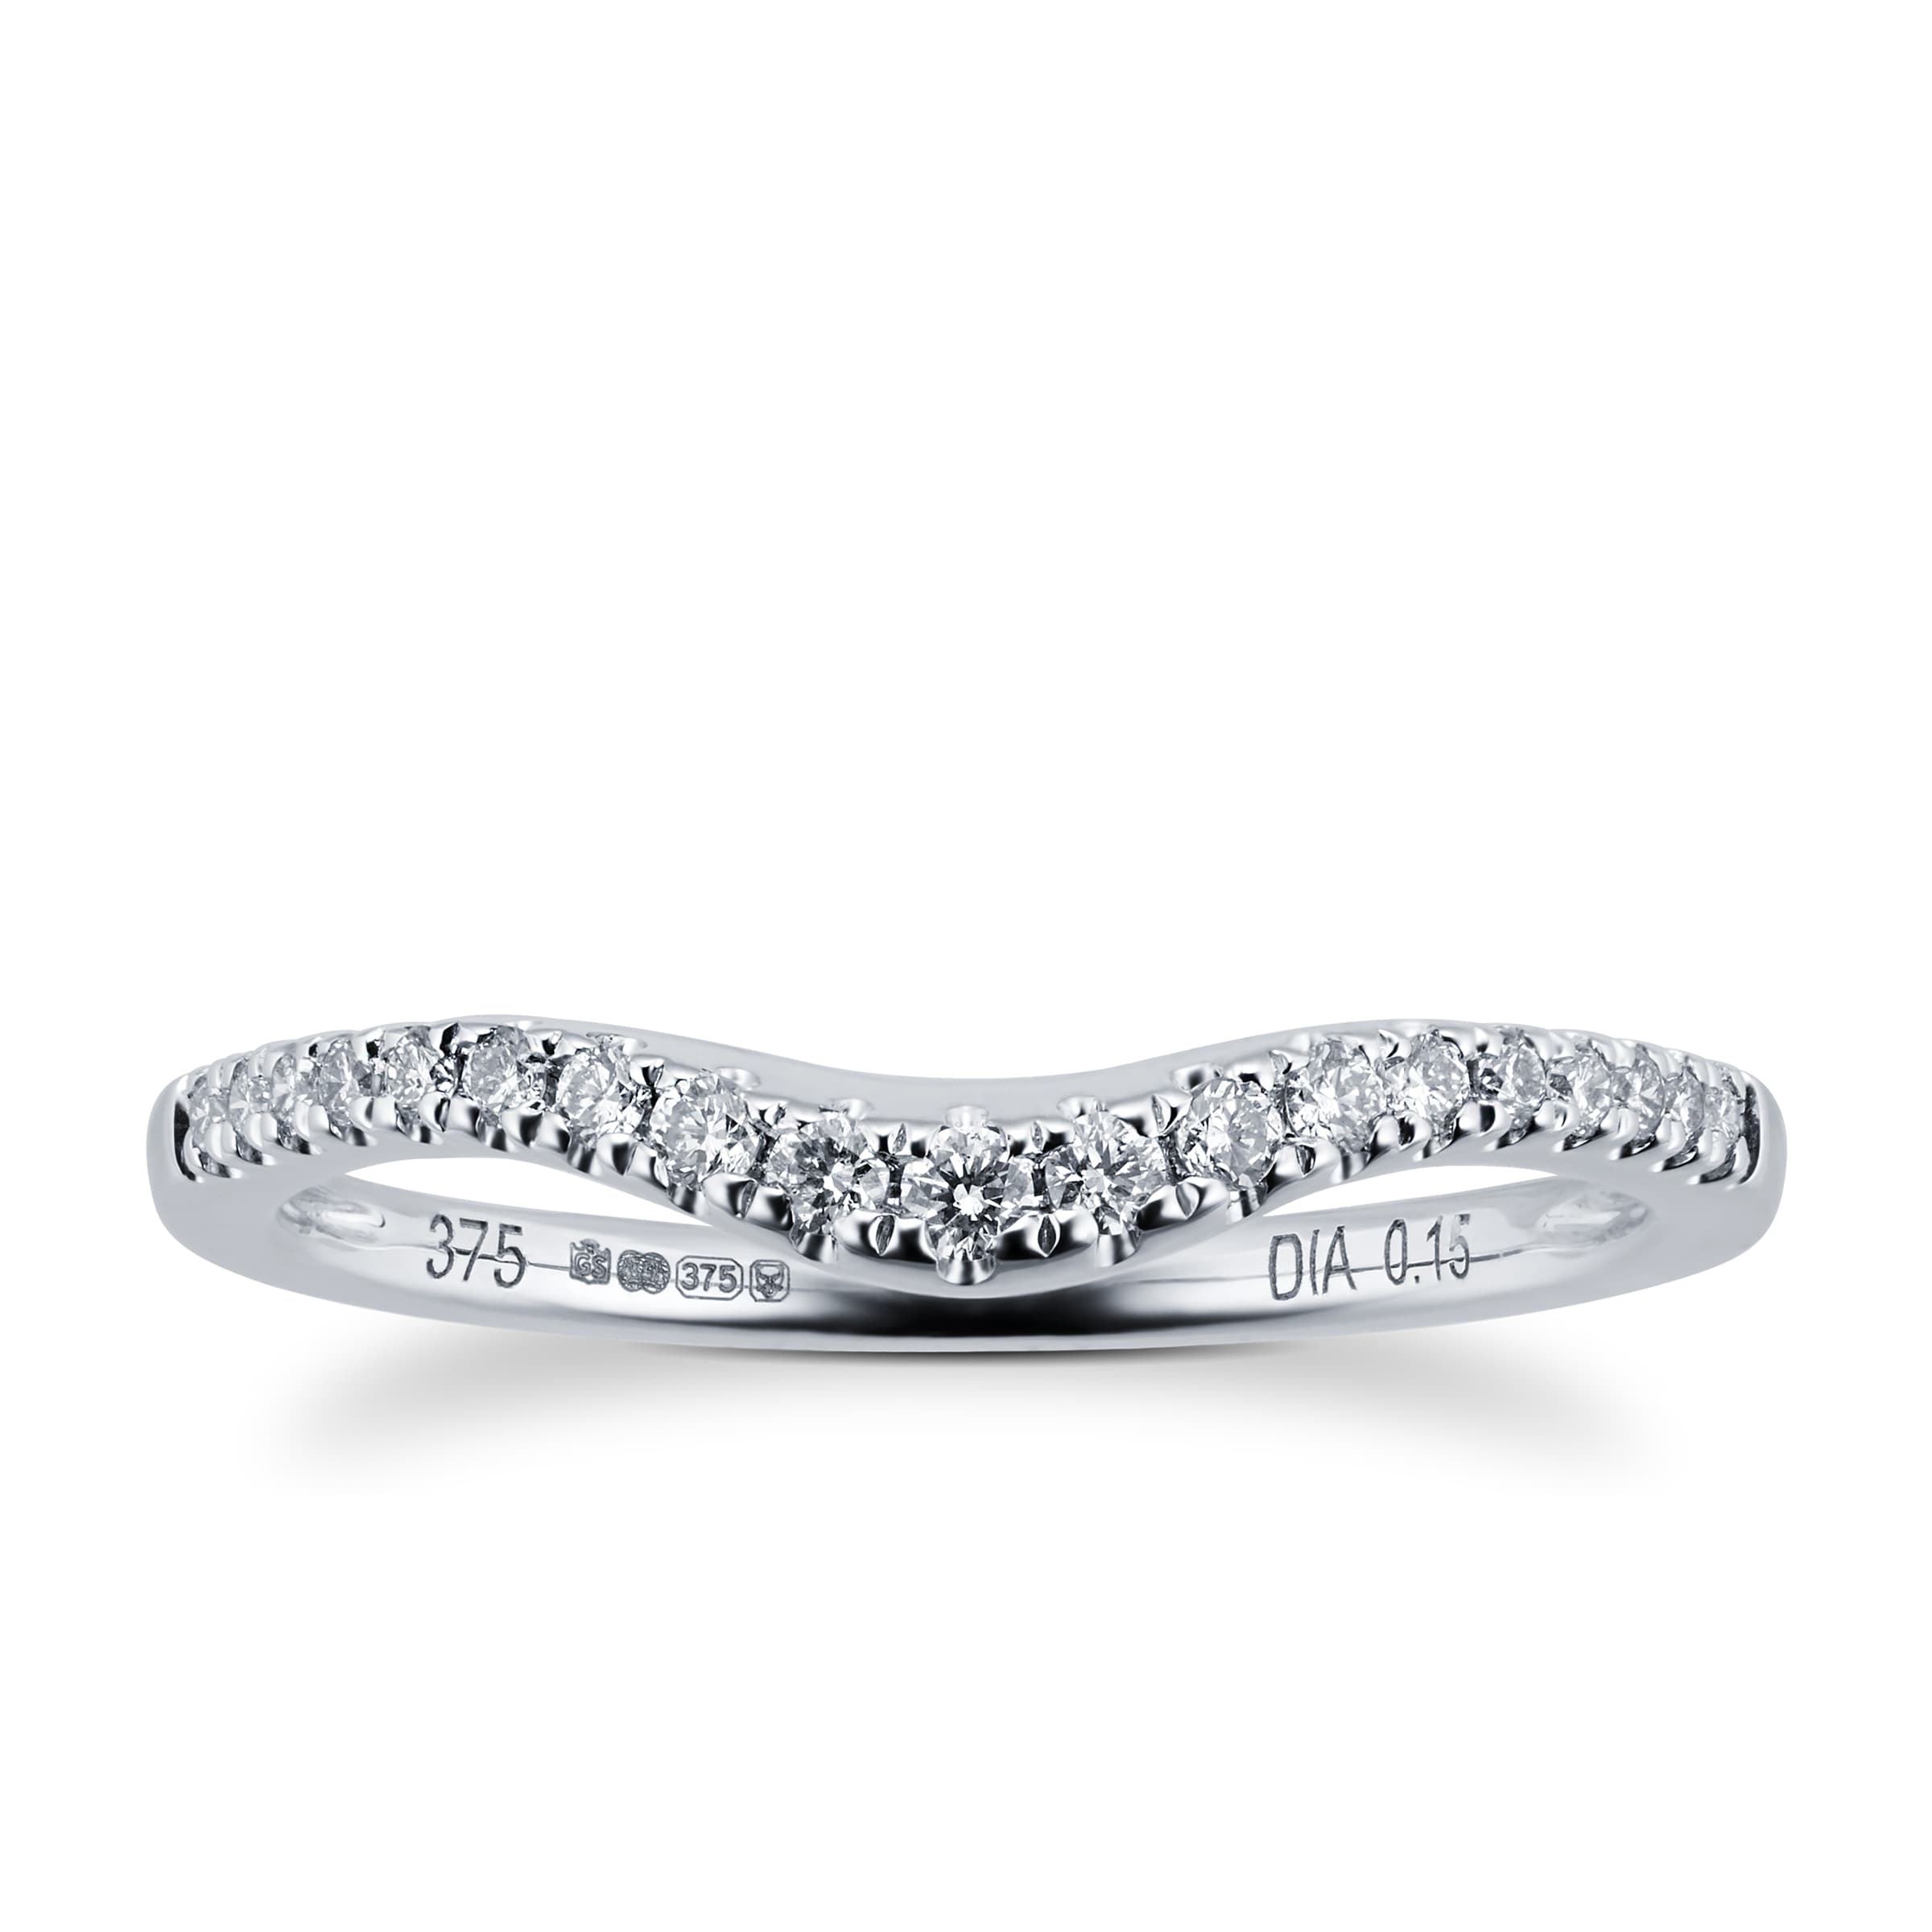 Brilliant Cut 0.15 Carat Total Weight Diamond Set Ladies Shaped Wedding Ring In 9 Carat White Gold - Ring Size K